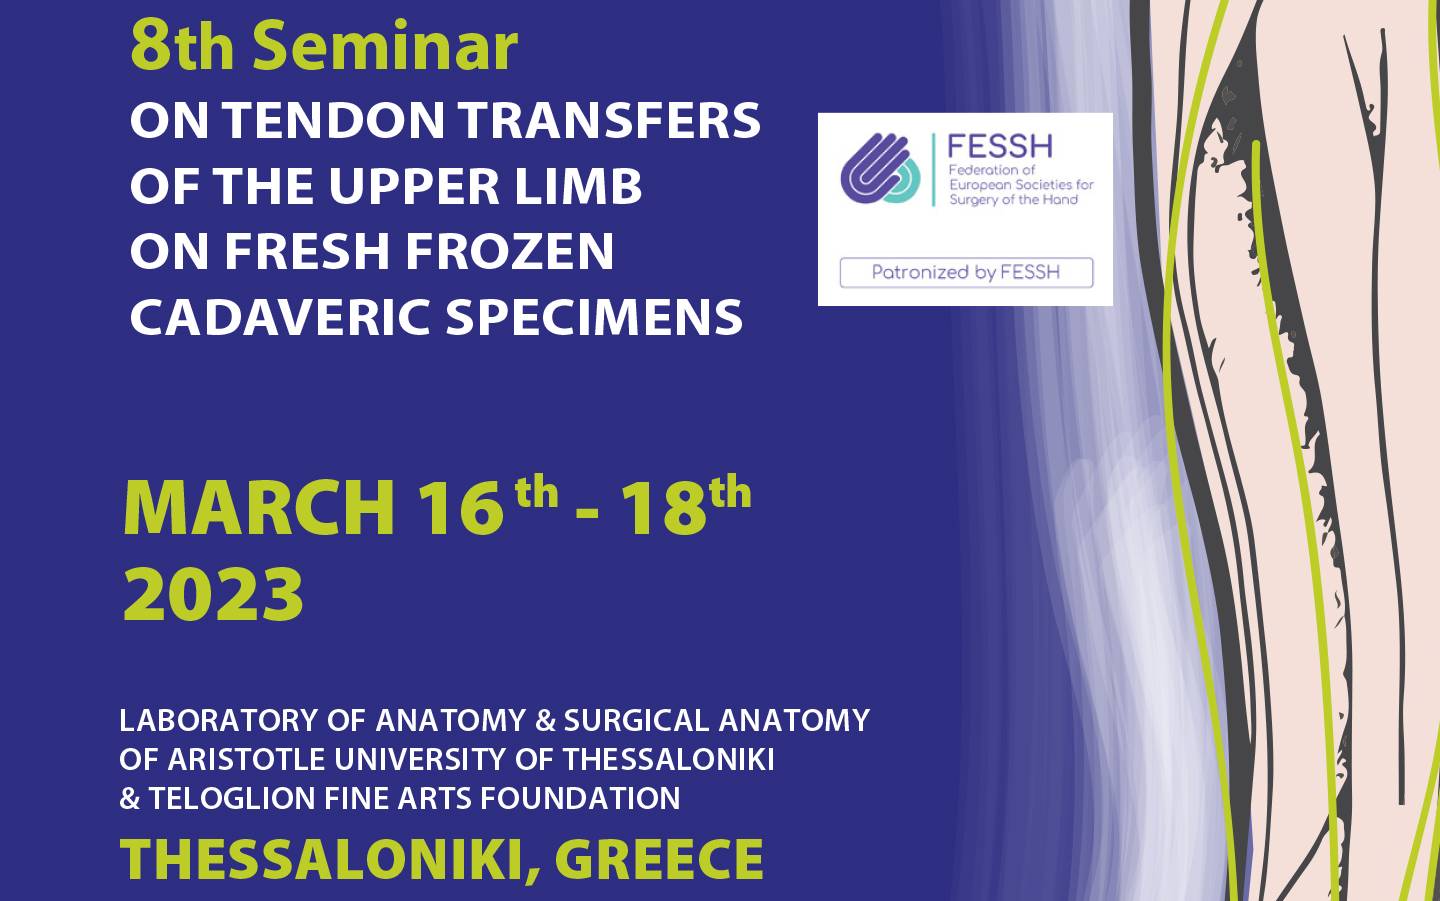 8th Seminar on tendon transfers of the upper limb on fresh frozen cadaveric specimens